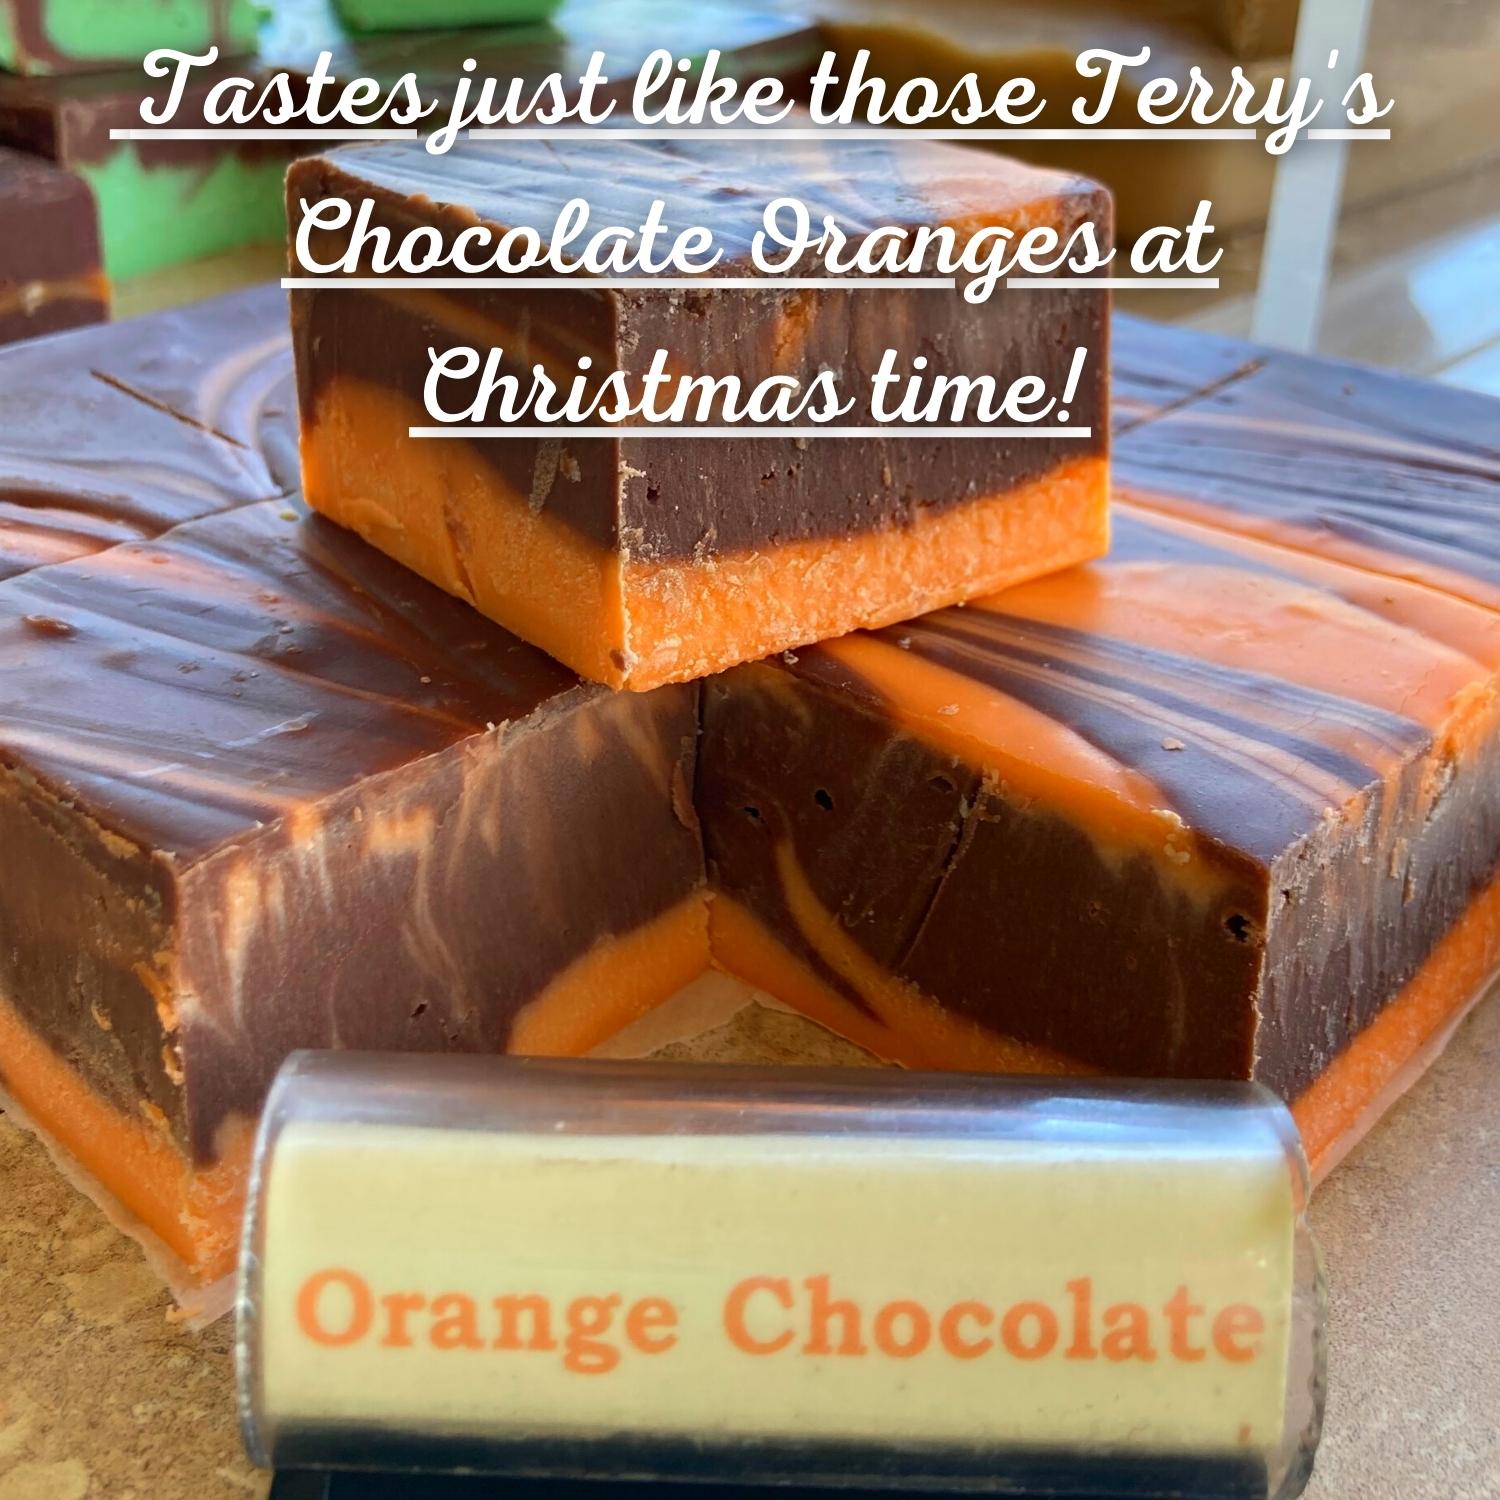 Orange Chocolate Fudge Tastes just like those Terry's Chocolate Oranges at Christmas time!